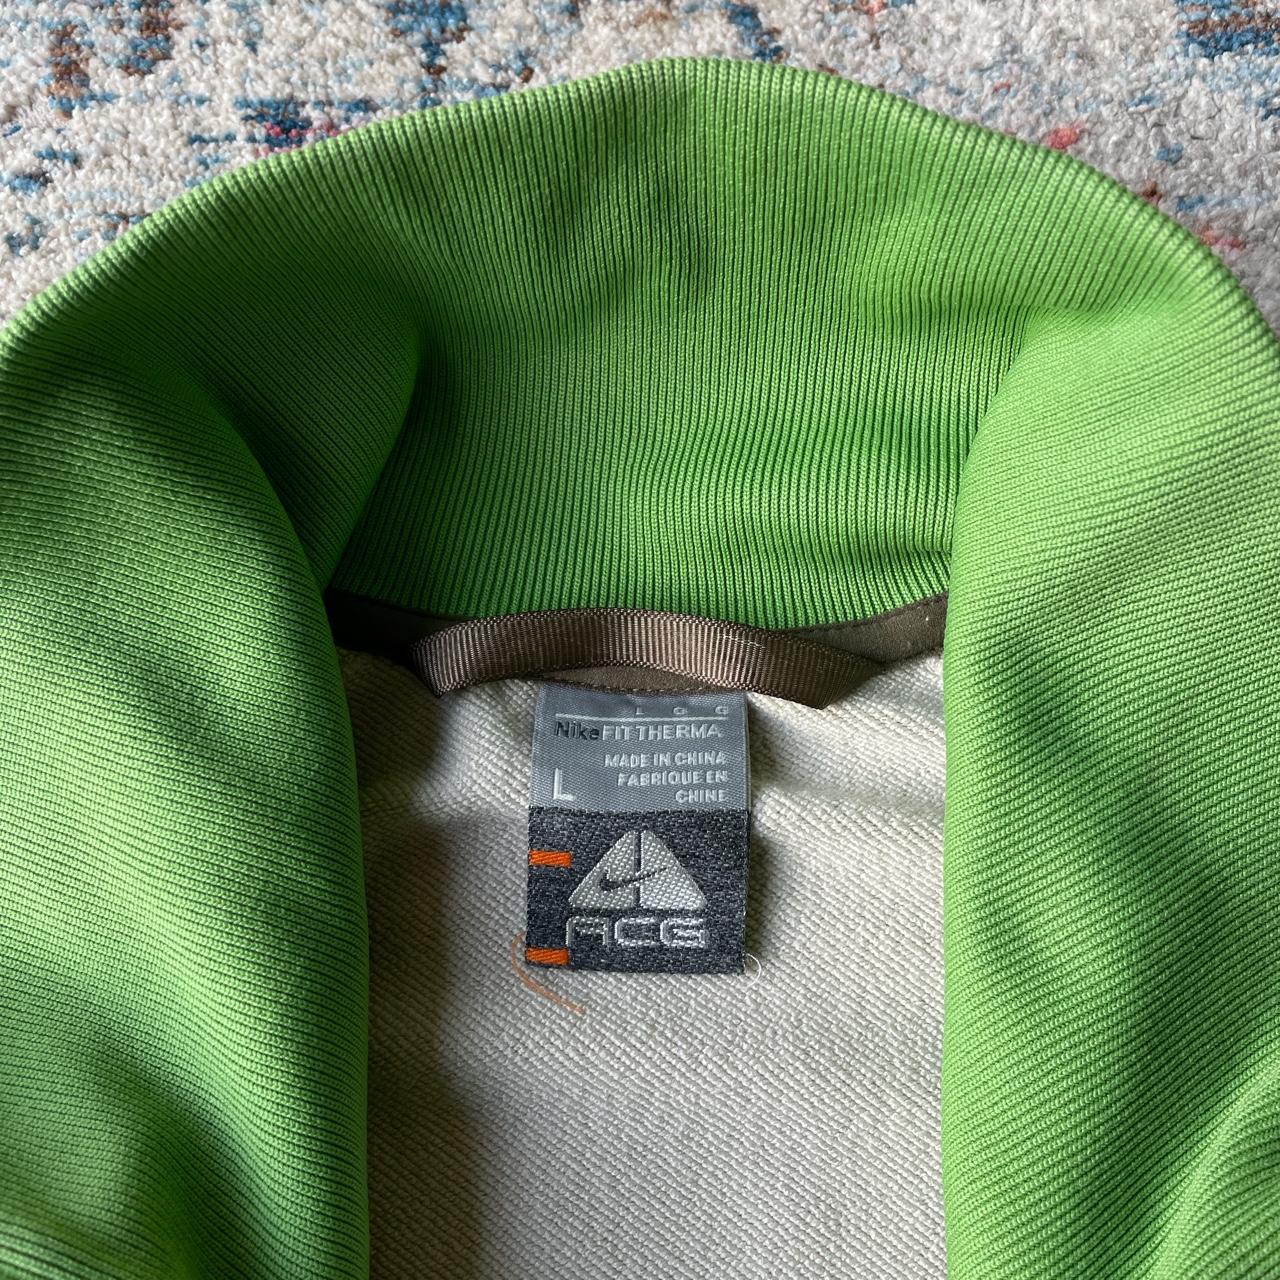 Vintage Nike ACG Green and Brown Jacket